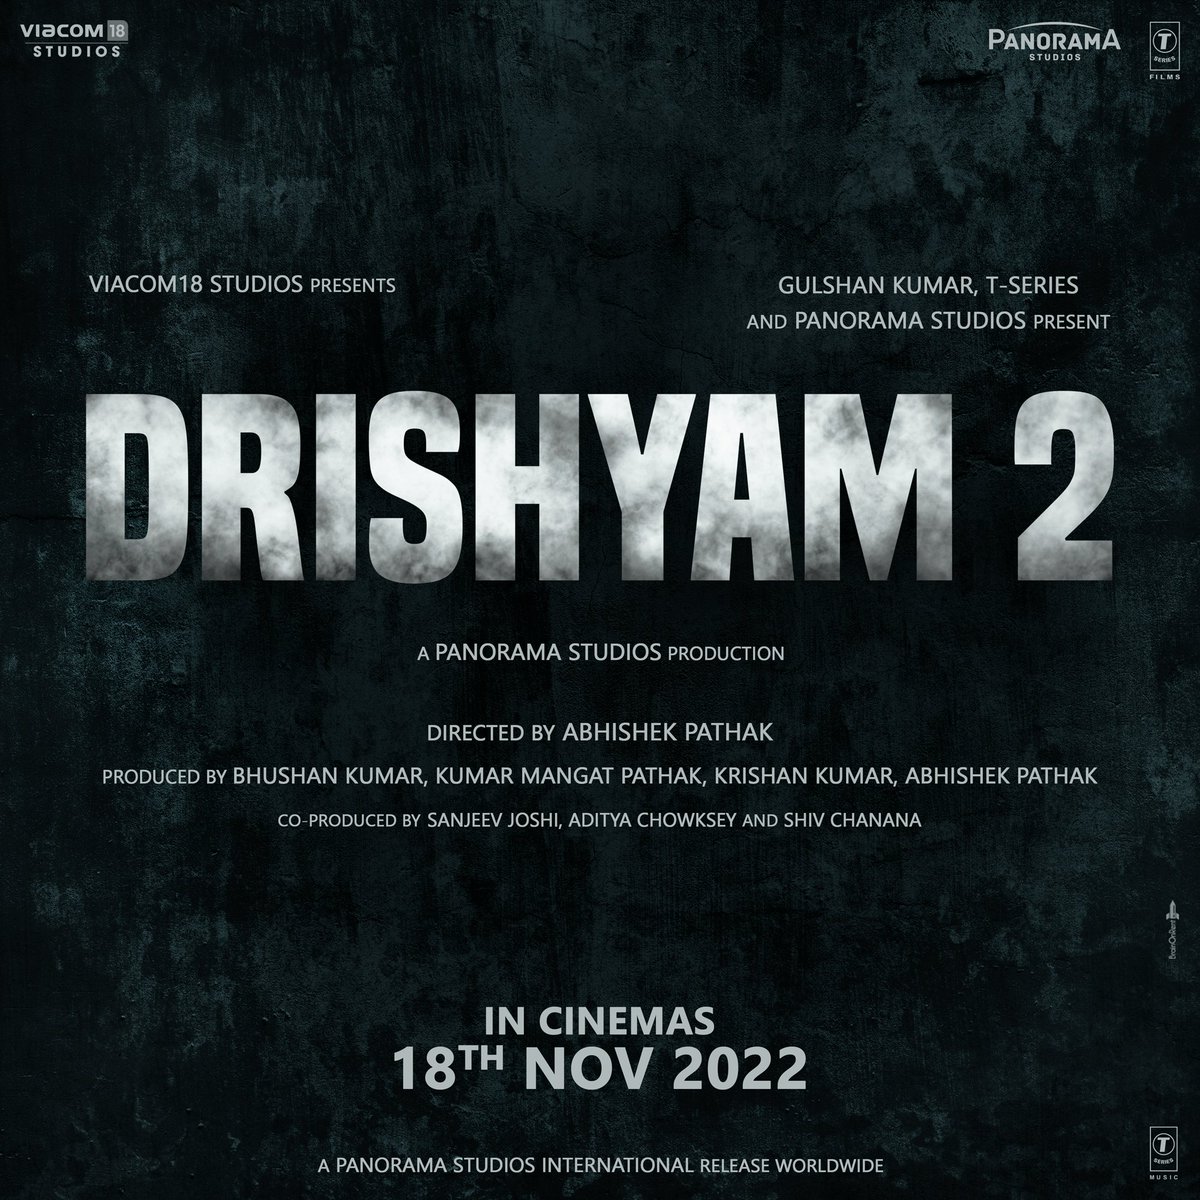 Attention! ⚠️
#Drishyam 2 releasing in theatres on 18th November 2022

 #Tabu #AkshayeKhanna @shriya1109 #RajatKapoor @ishidutta  #MrunalJadhav @AbhishekPathakk #BhushanKumar #KrishanKumar @KumarMangat @Viacom18Studios @TSeries @PanoramaMovies 

#Drishyam2